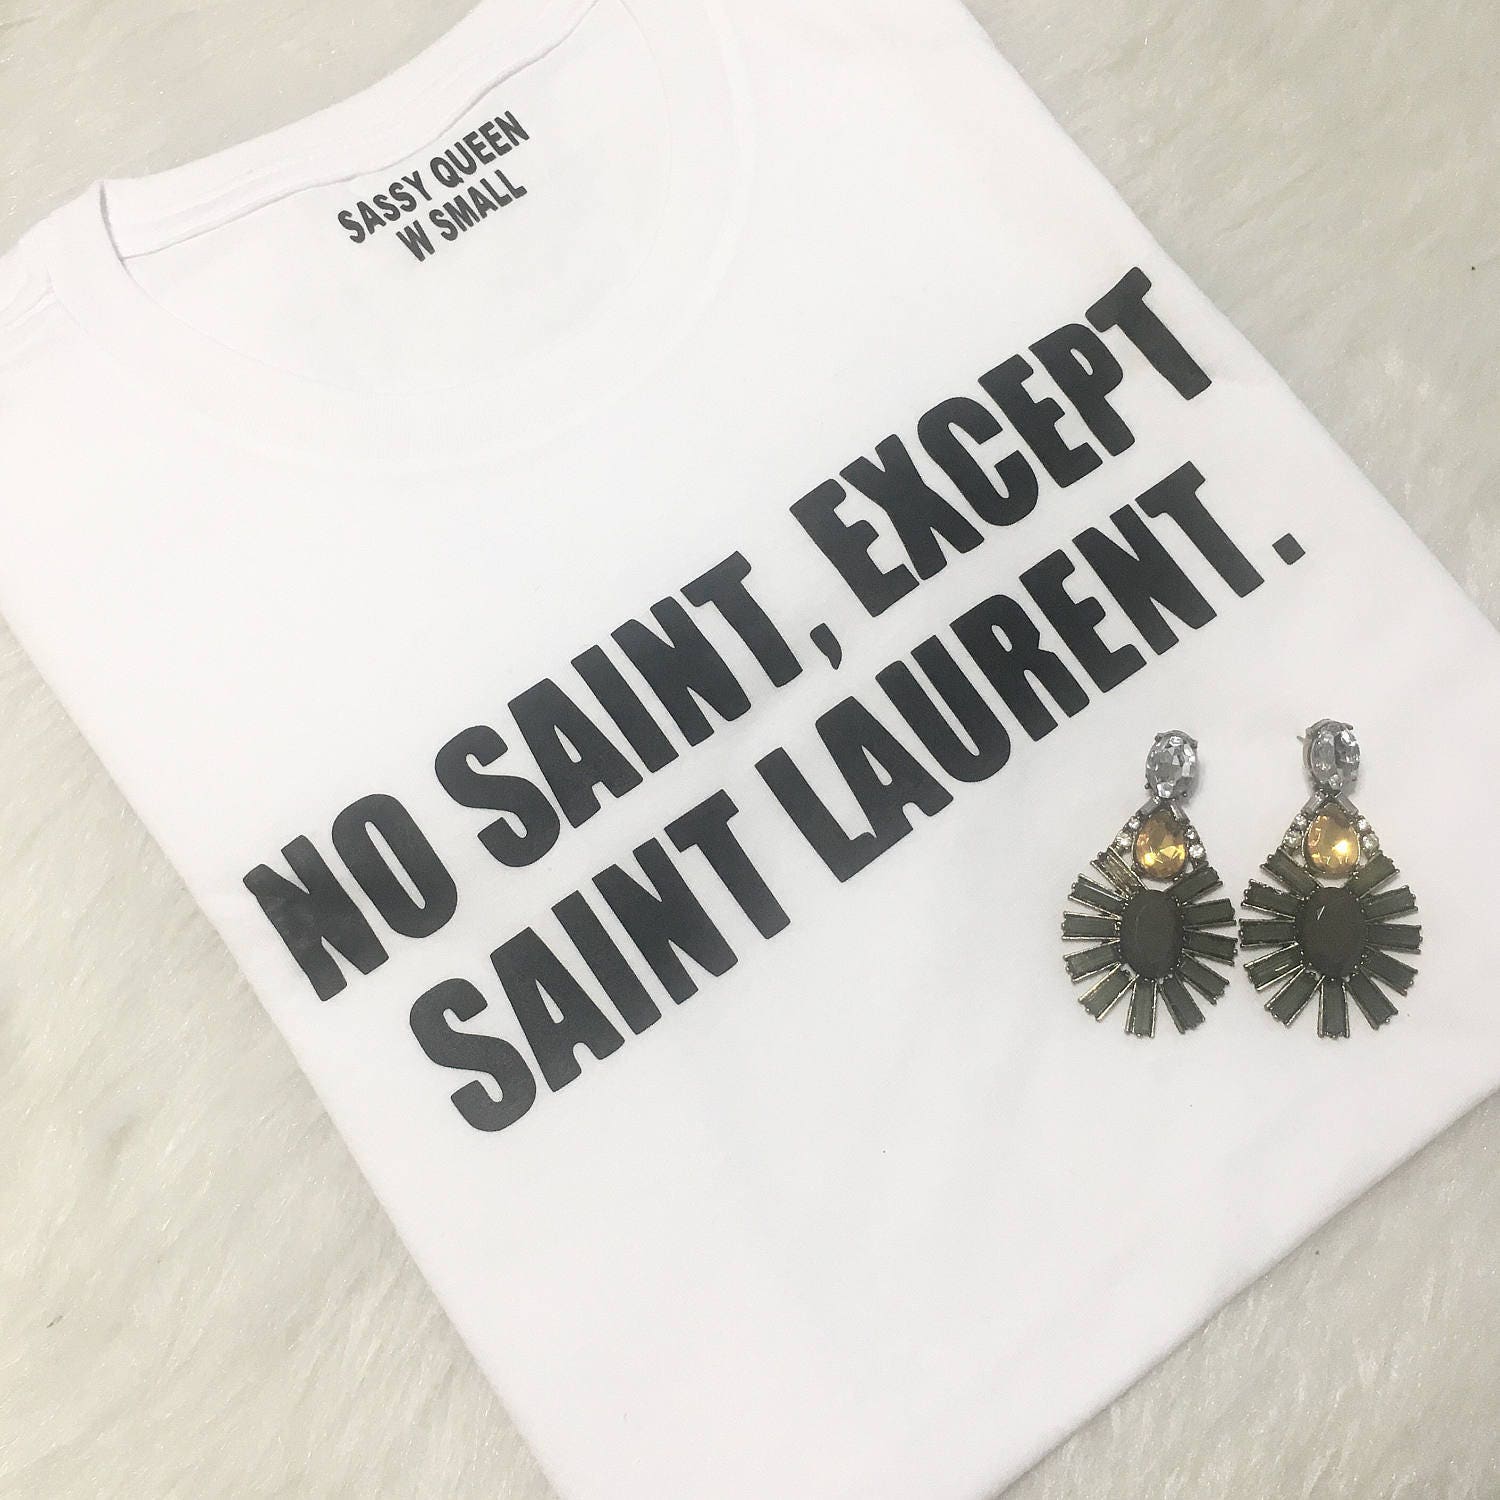 No saint, except Saint Laurent / Statement Tshirt / Graphic Tee / Statement Tee / Graphic Tshirt